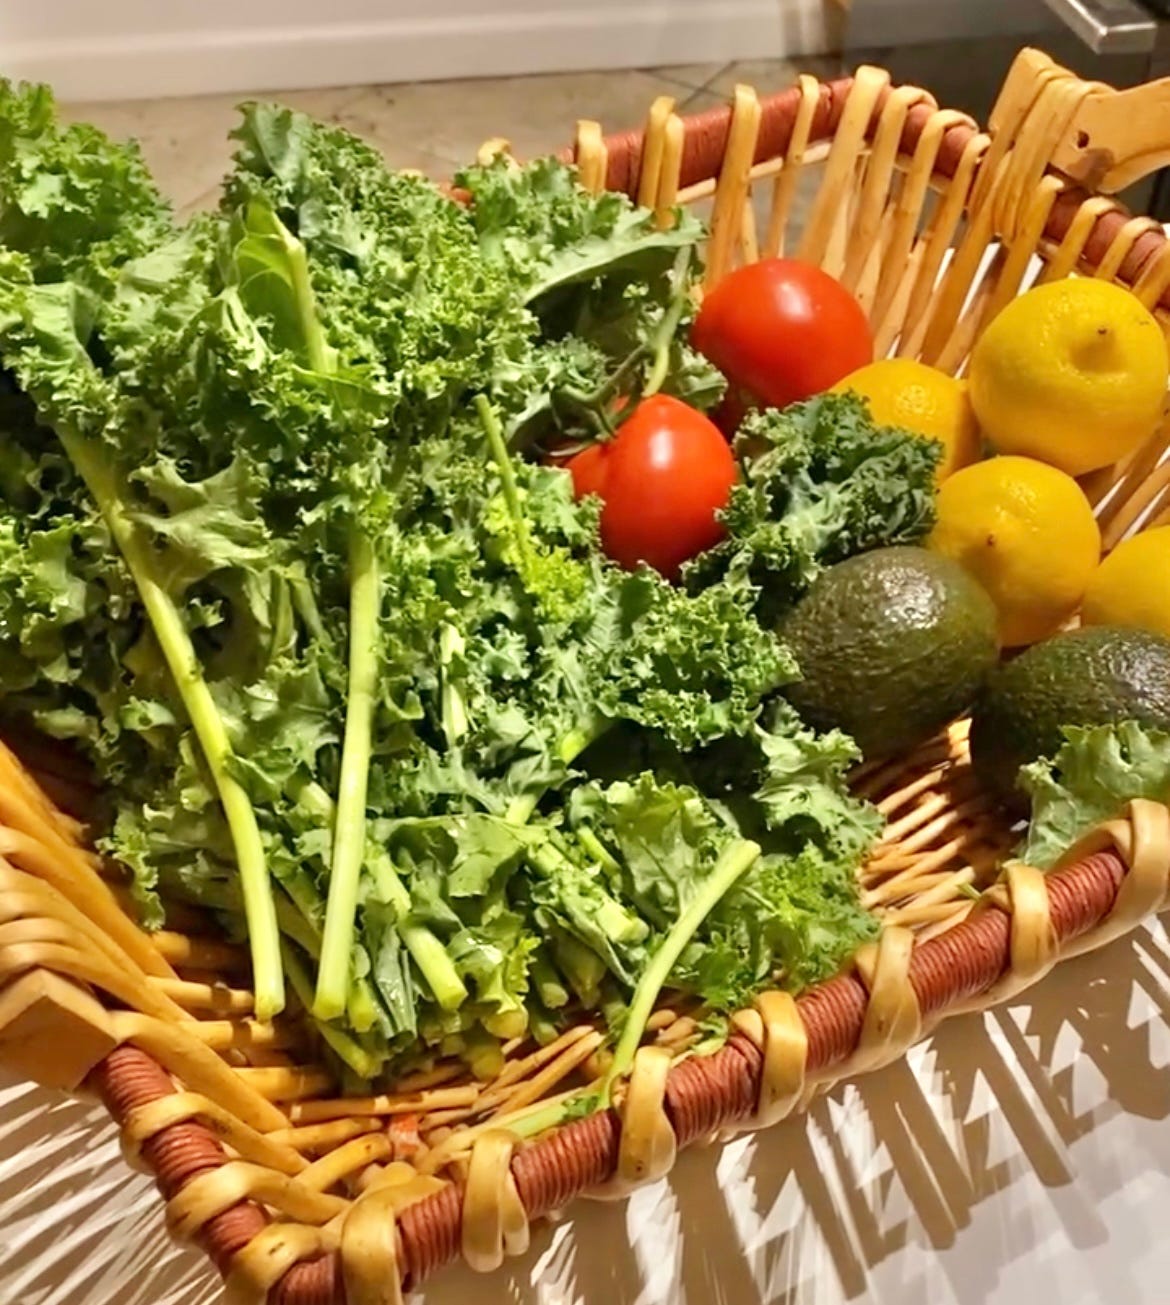 Basket of kale, tomatoes and lemons